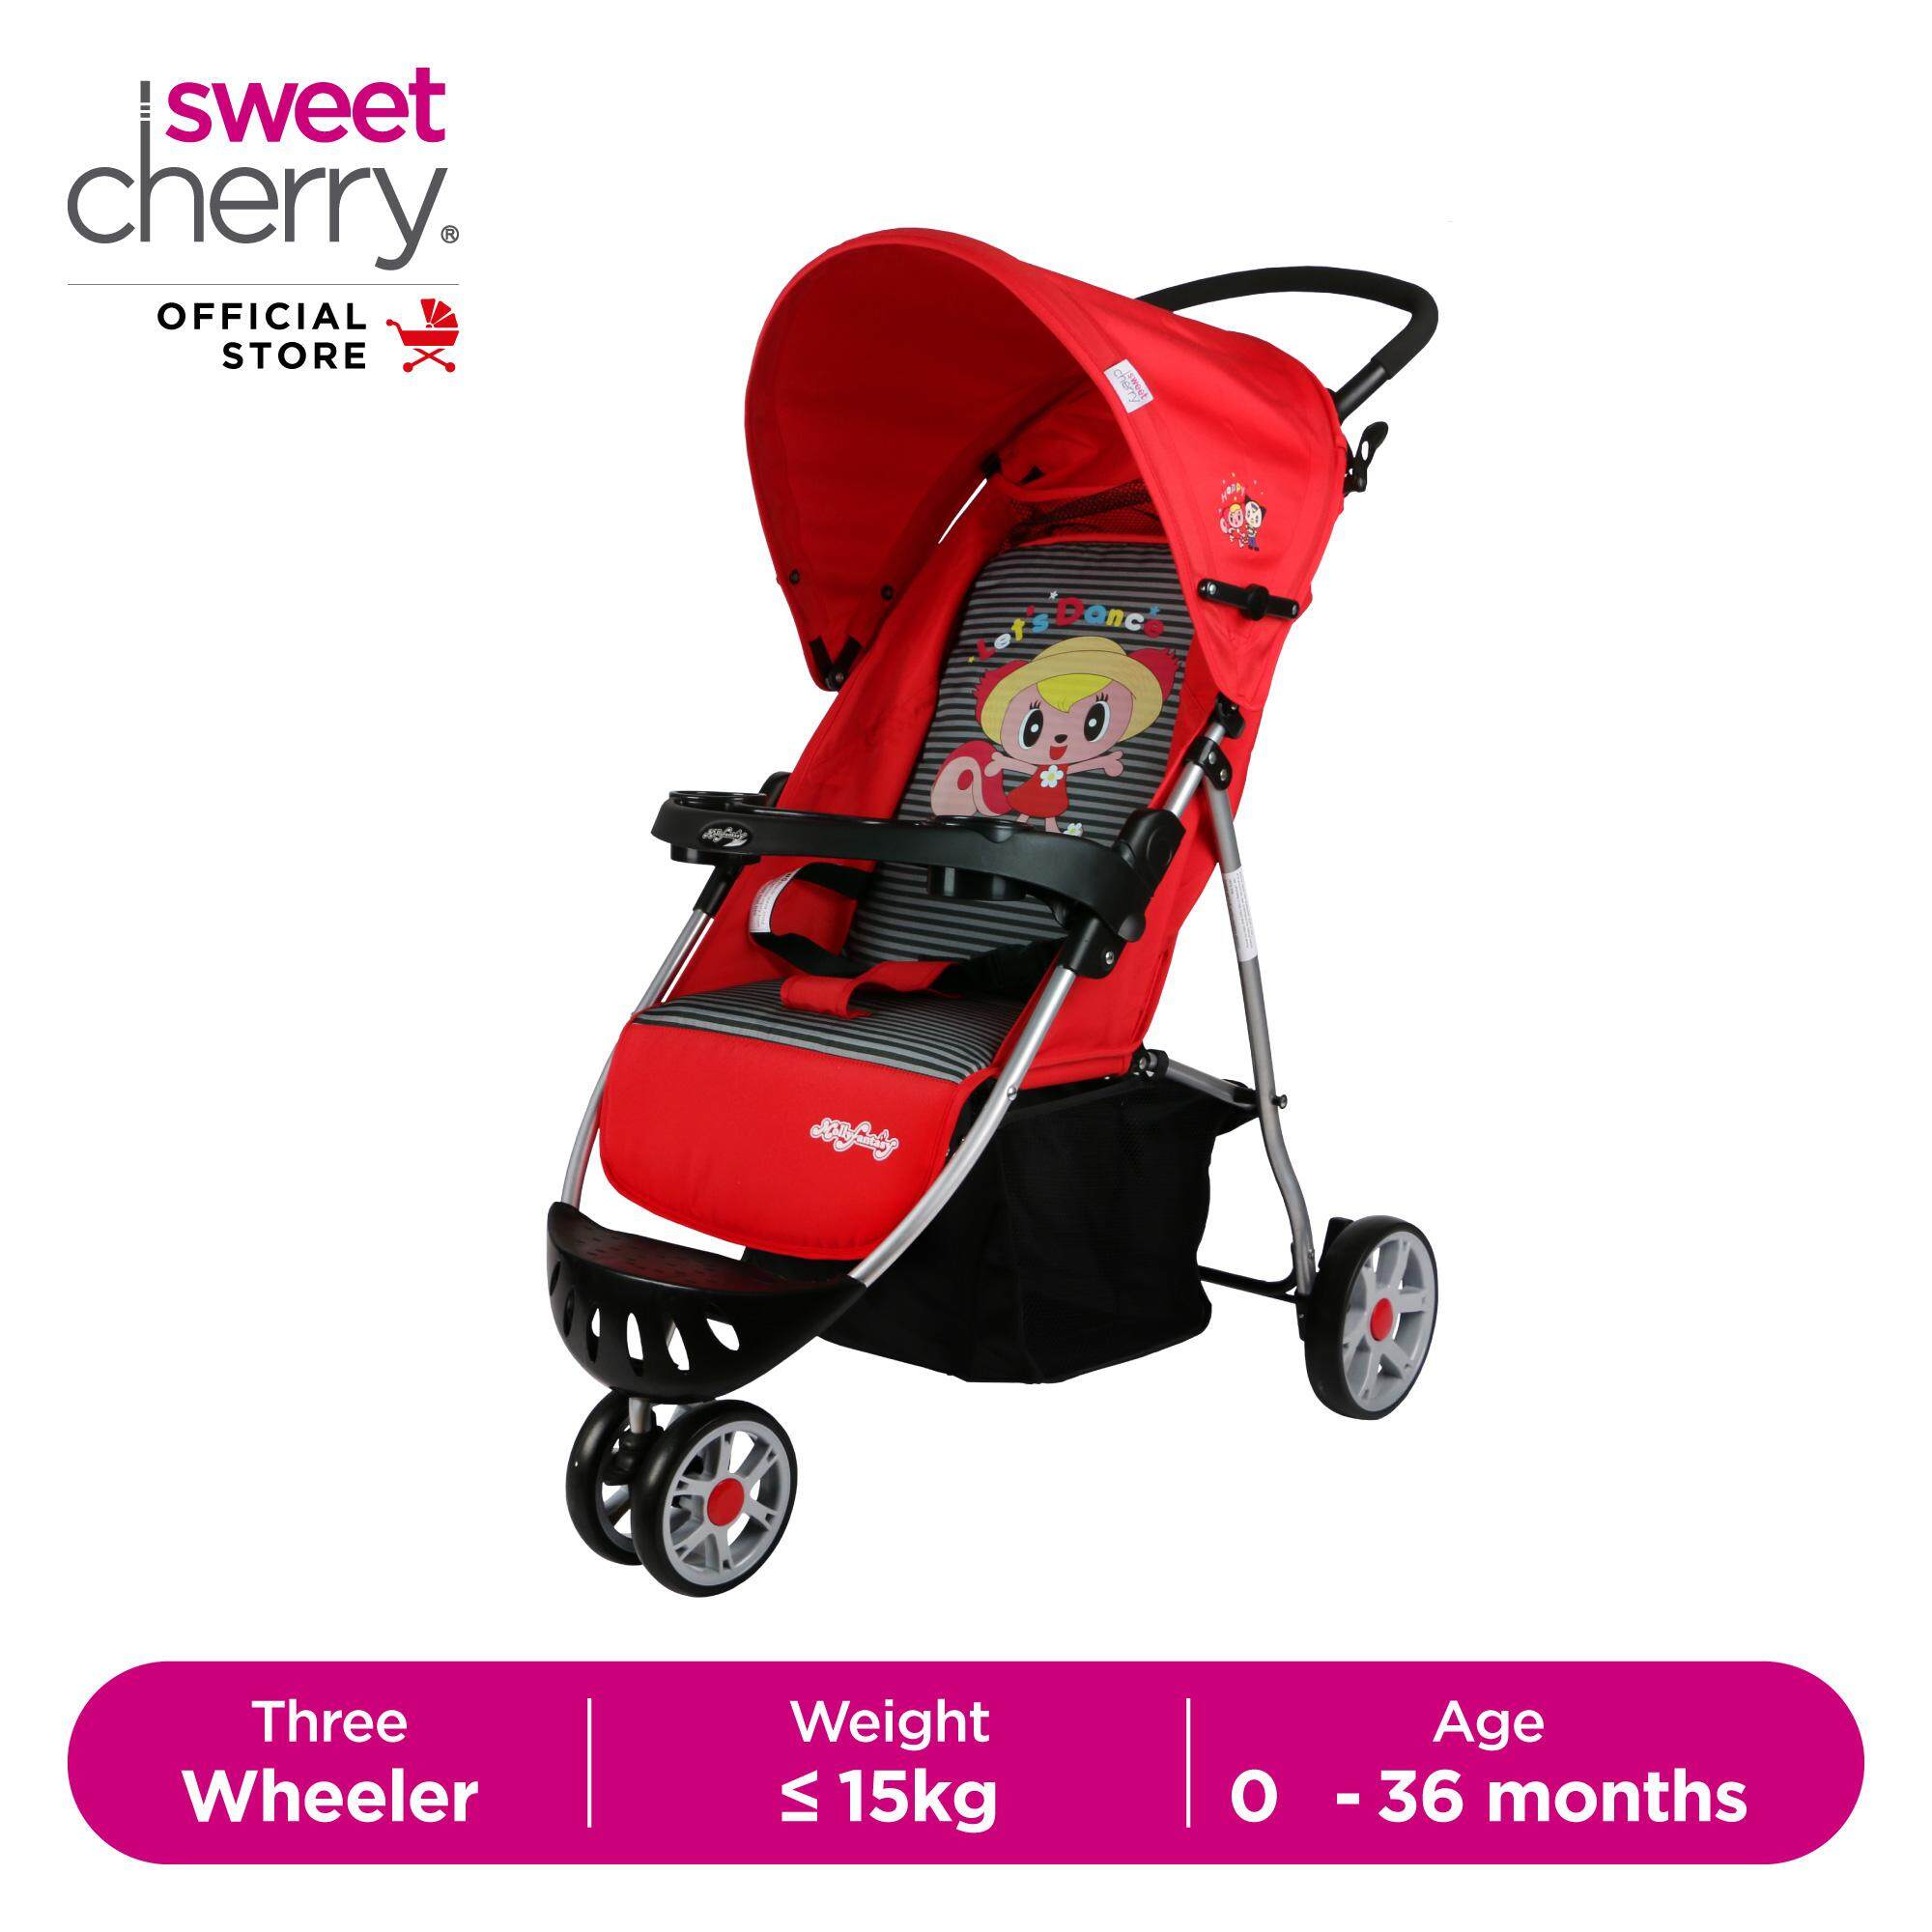 sweet cherry stroller price